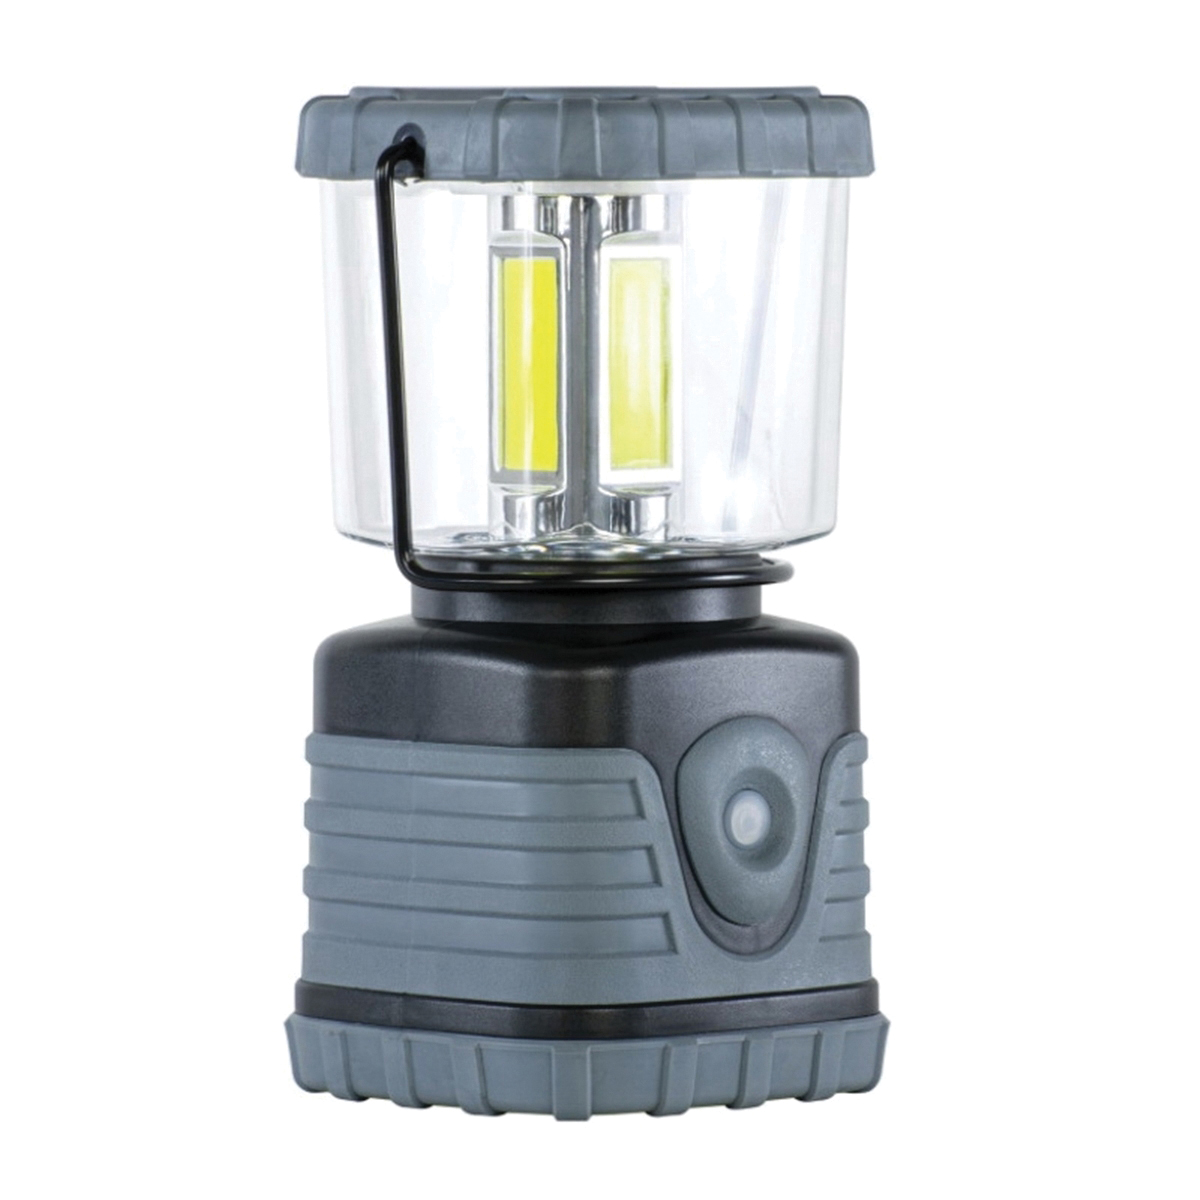 Adventure Max Series 41-3120 Lantern, D-Cell Battery, Black/Gray